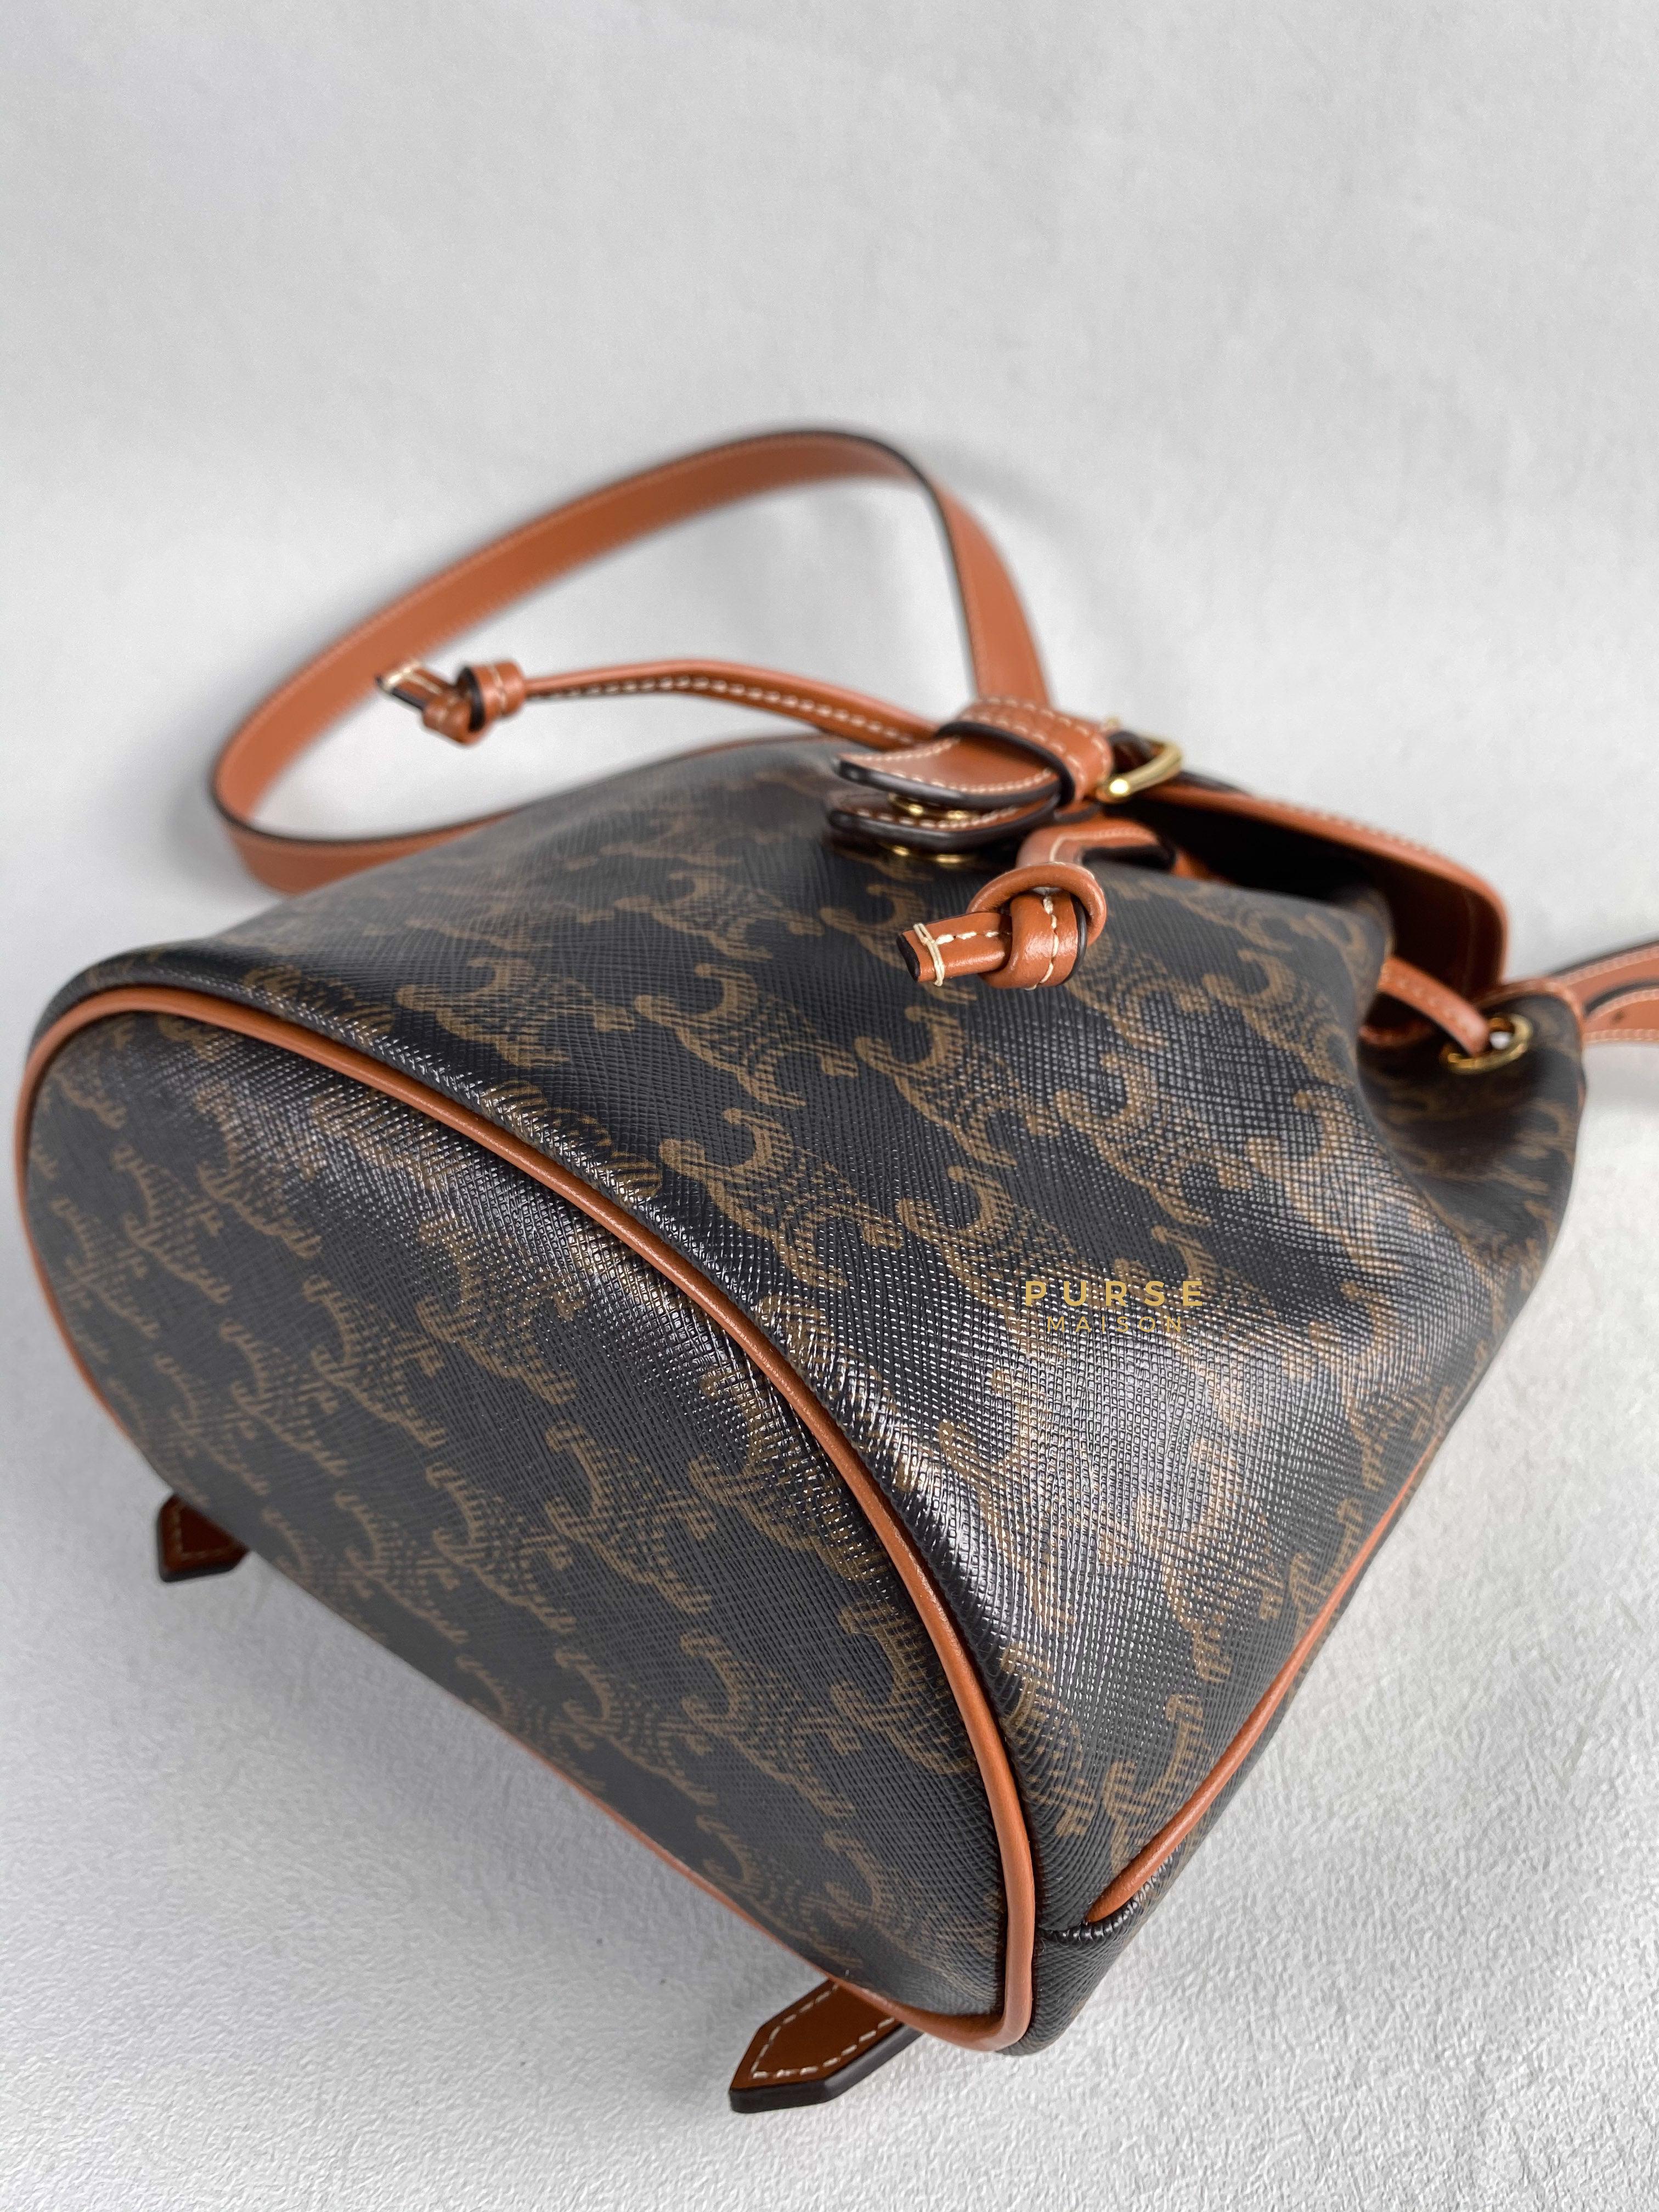 Celine Triomphe Canvas Calfskin Mini Folco Backpack | Purse Maison Luxury Bags Shop